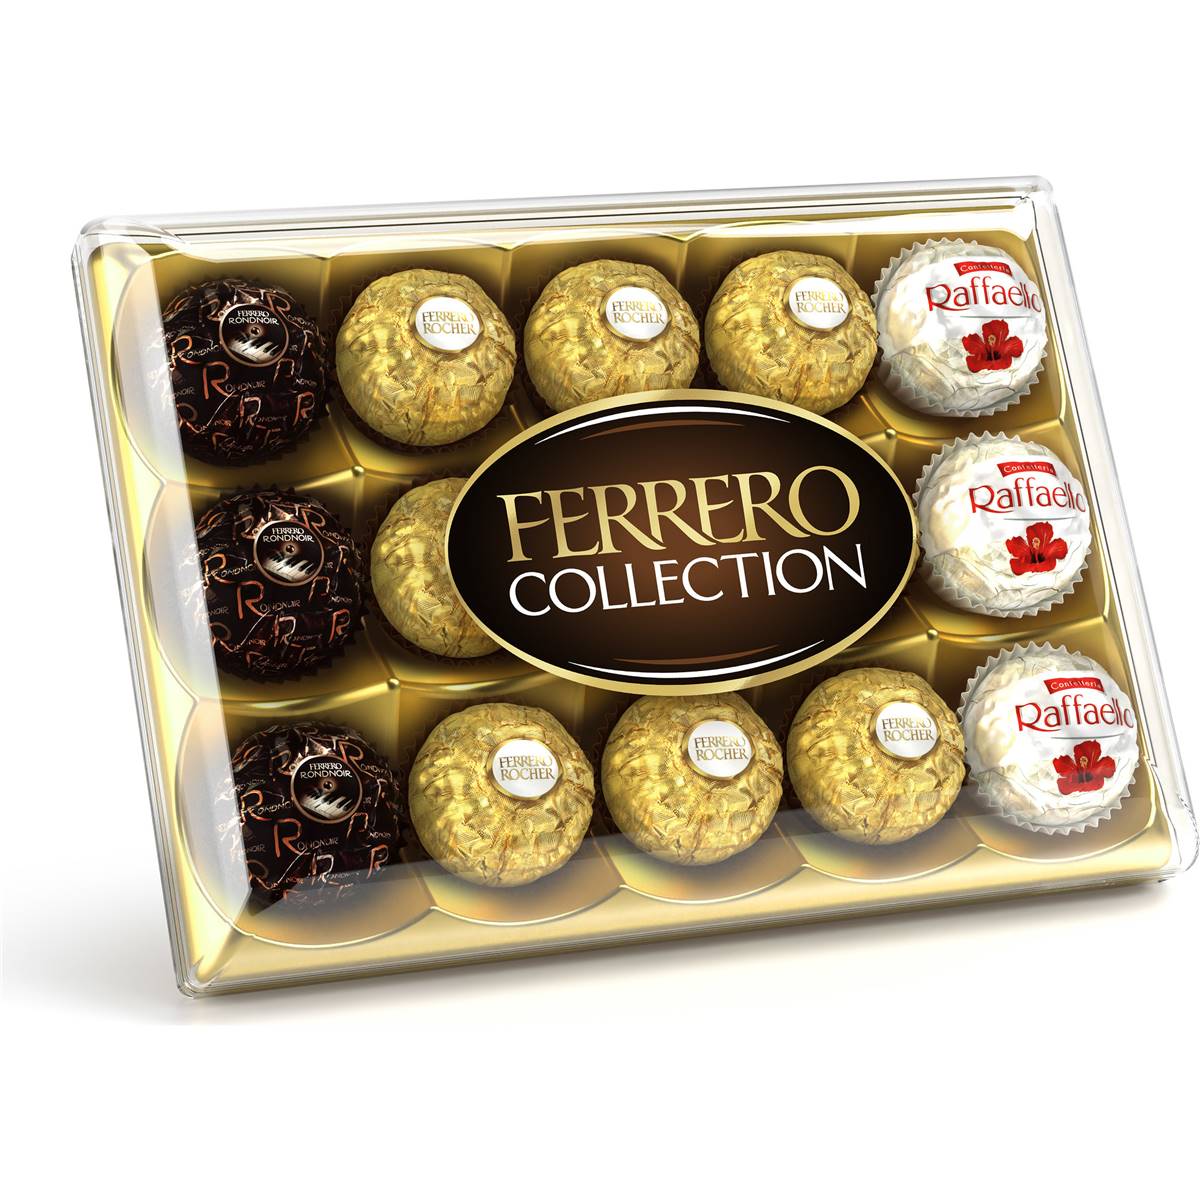 Calories in Ferrero Collection Rocher Raffaello Rondnoir Chocolate Gift Box